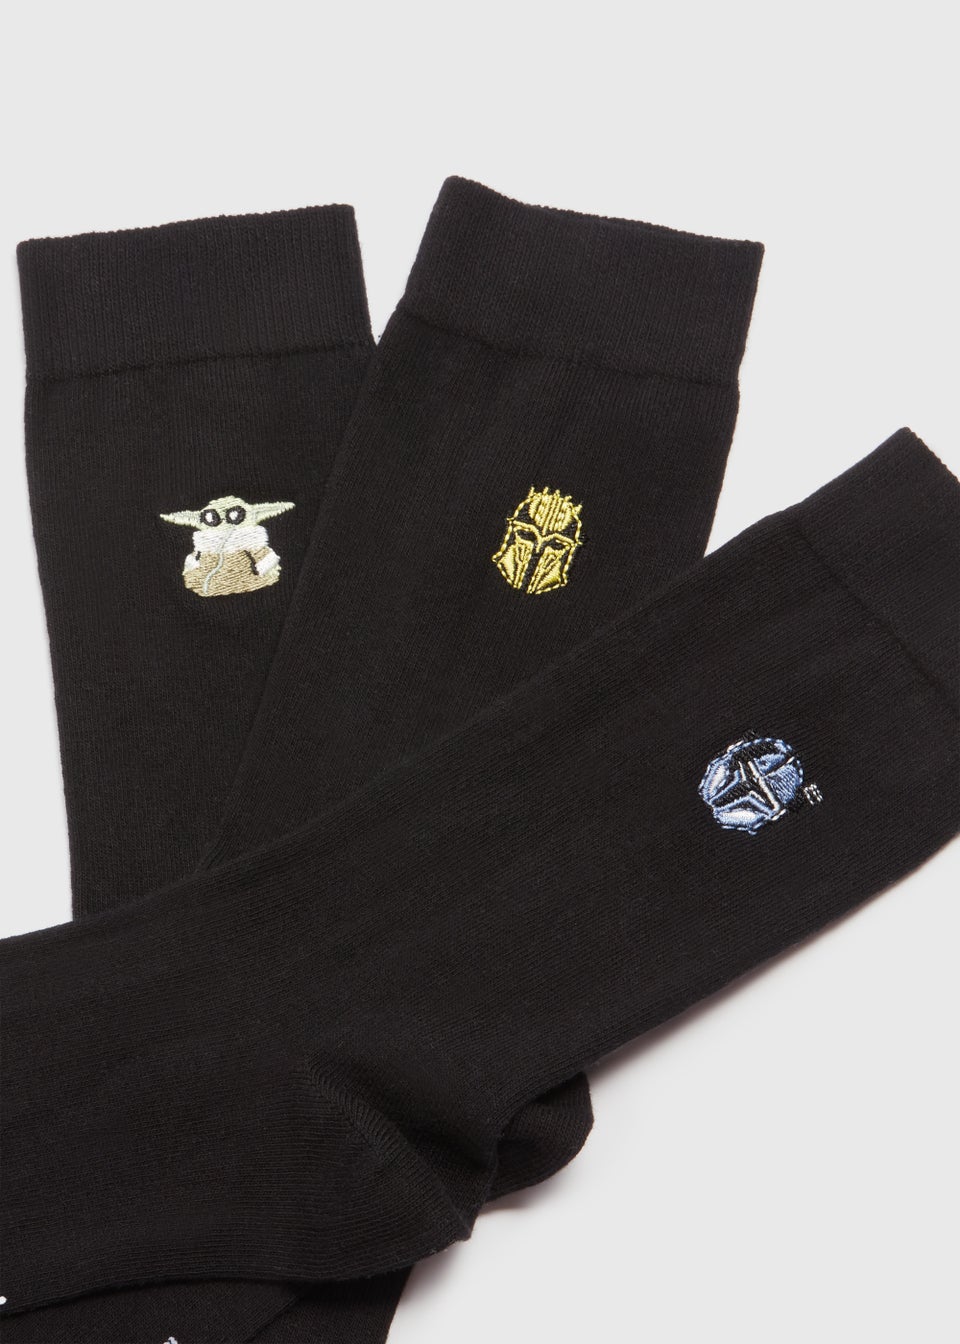 3 Pack Black Star Wars Embroidered Socks